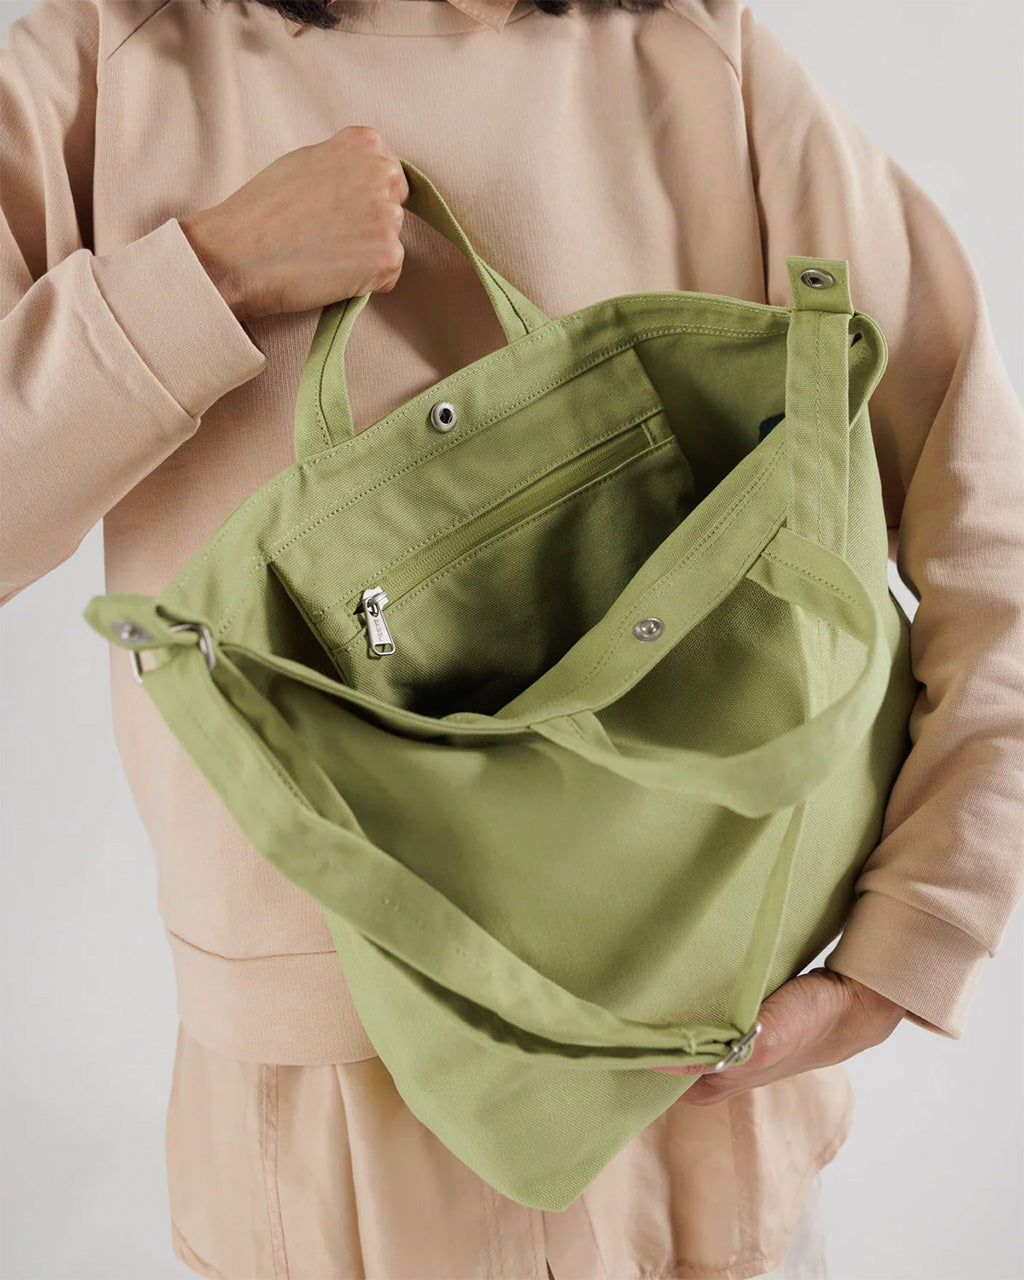 Allen Company Mesh Decoy Bag, Fits 24 Standard Duck Decoys, 52 L x 30 W,  Olive